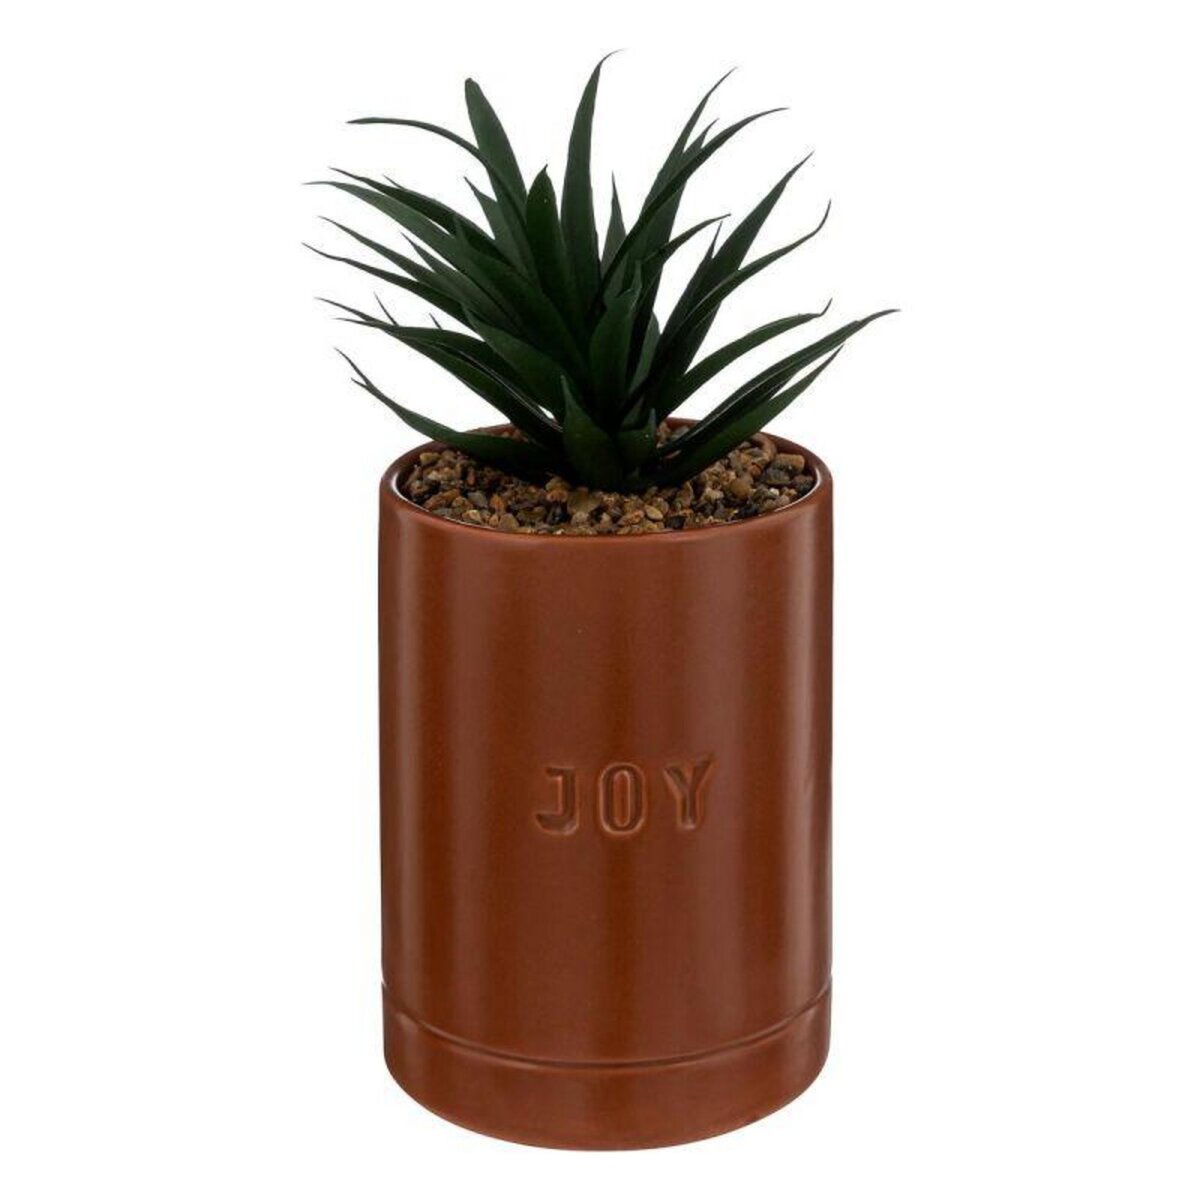  Plante Artificielle en Pot  Joy  20cm Marron